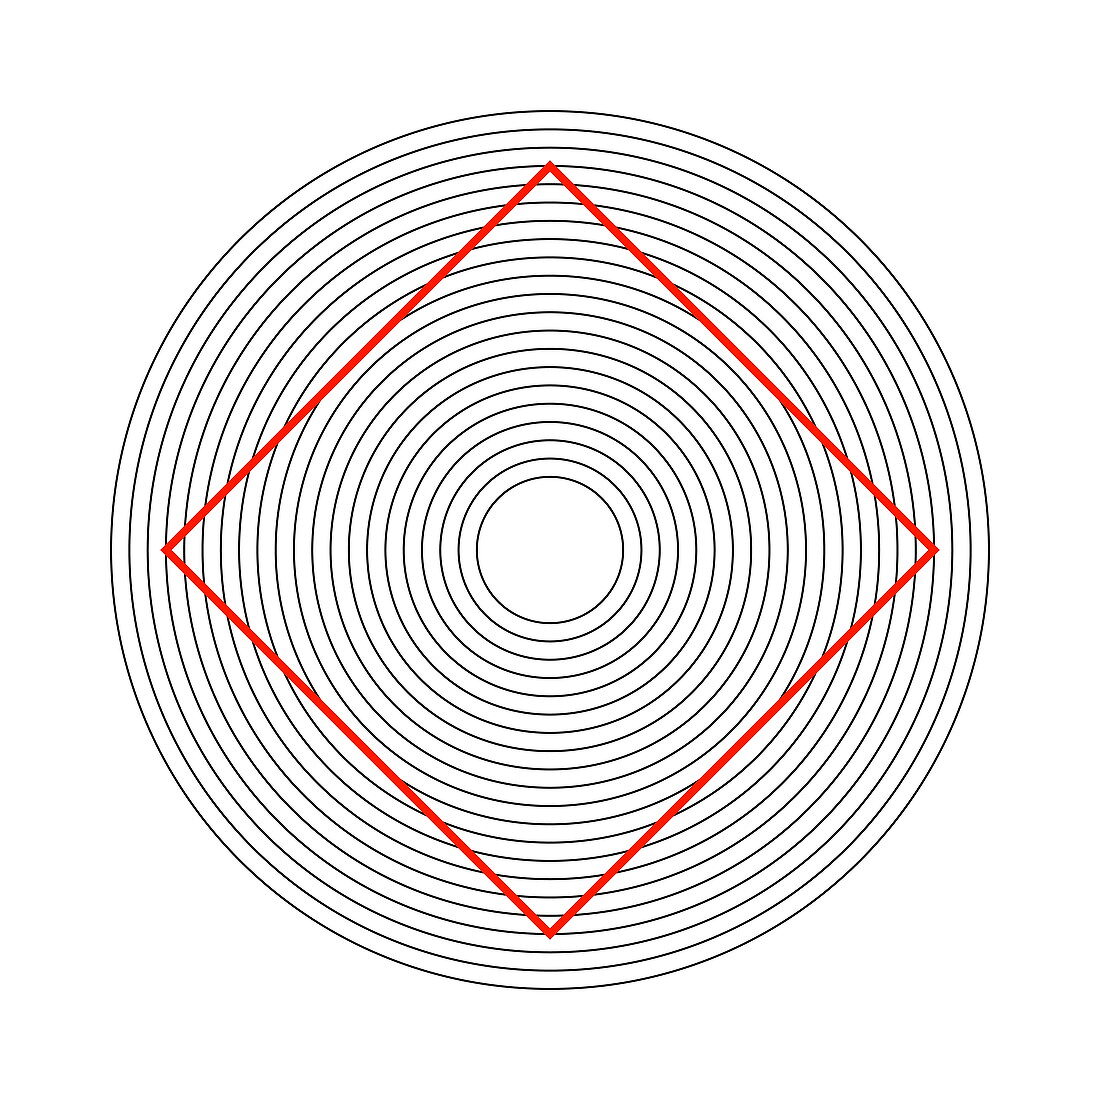 Ehrenstein illusion,square in circles